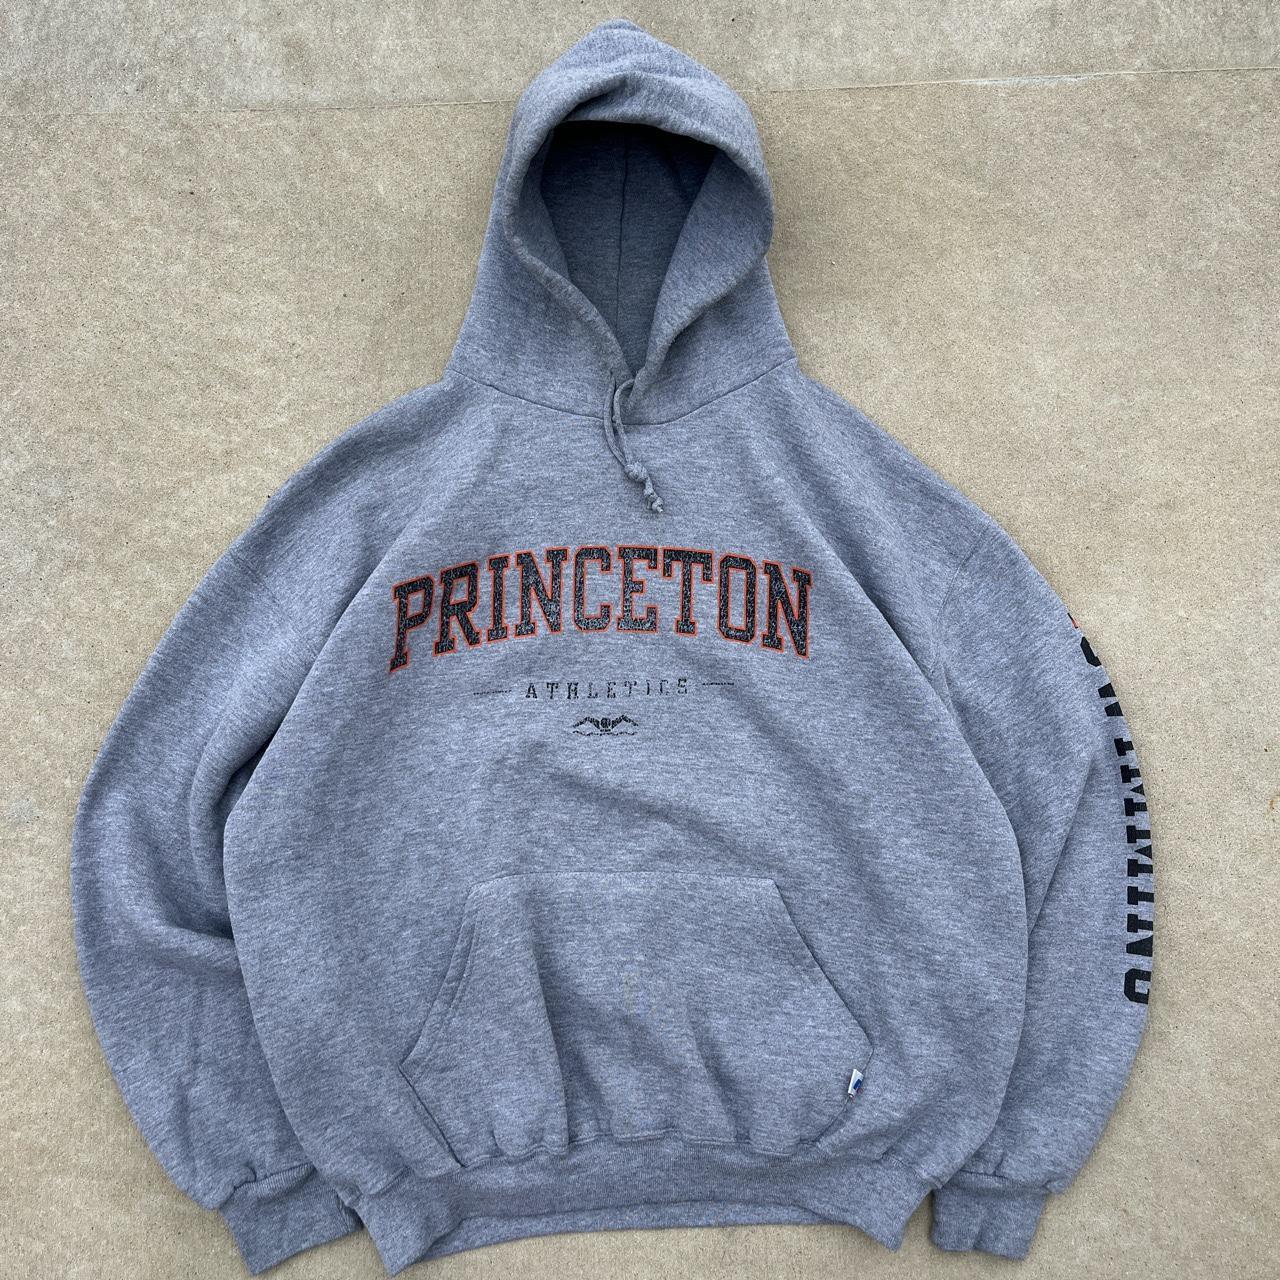 Vintage Princeton athletics swimming hoodie size... - Depop